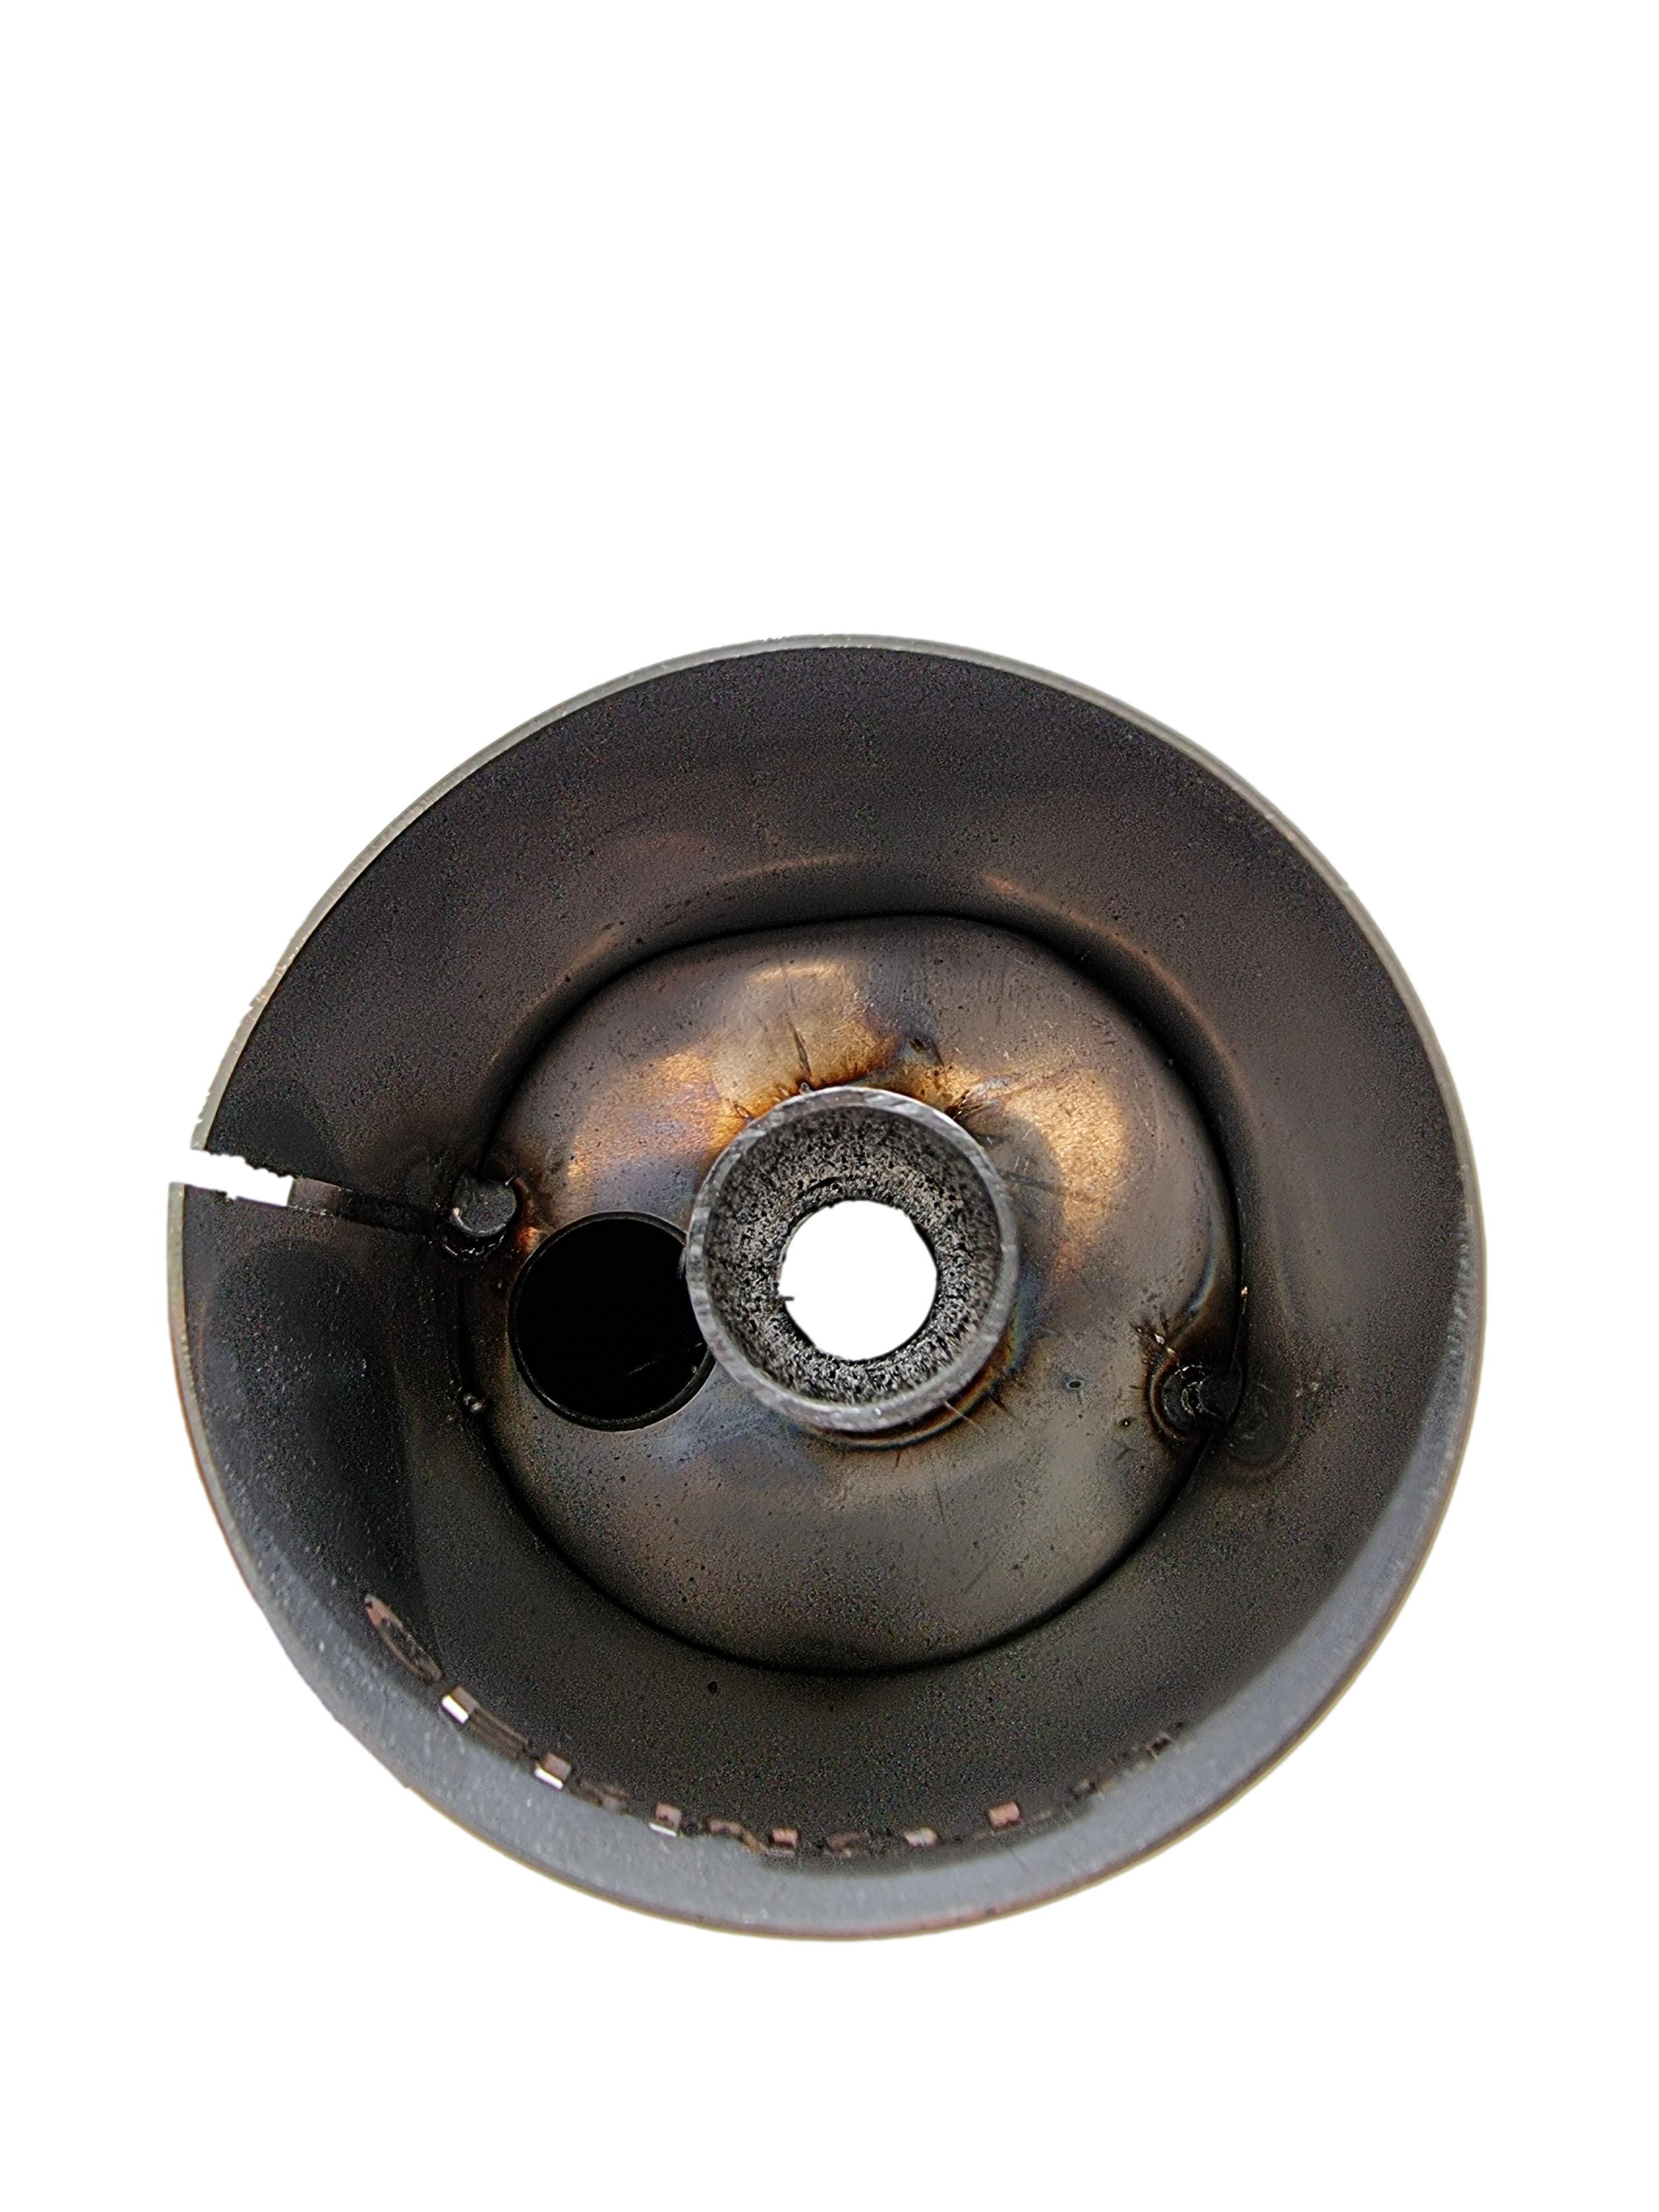 Auspufftopf Tuning 32 mm mit Gegenkonus Edelstahl poliert S51